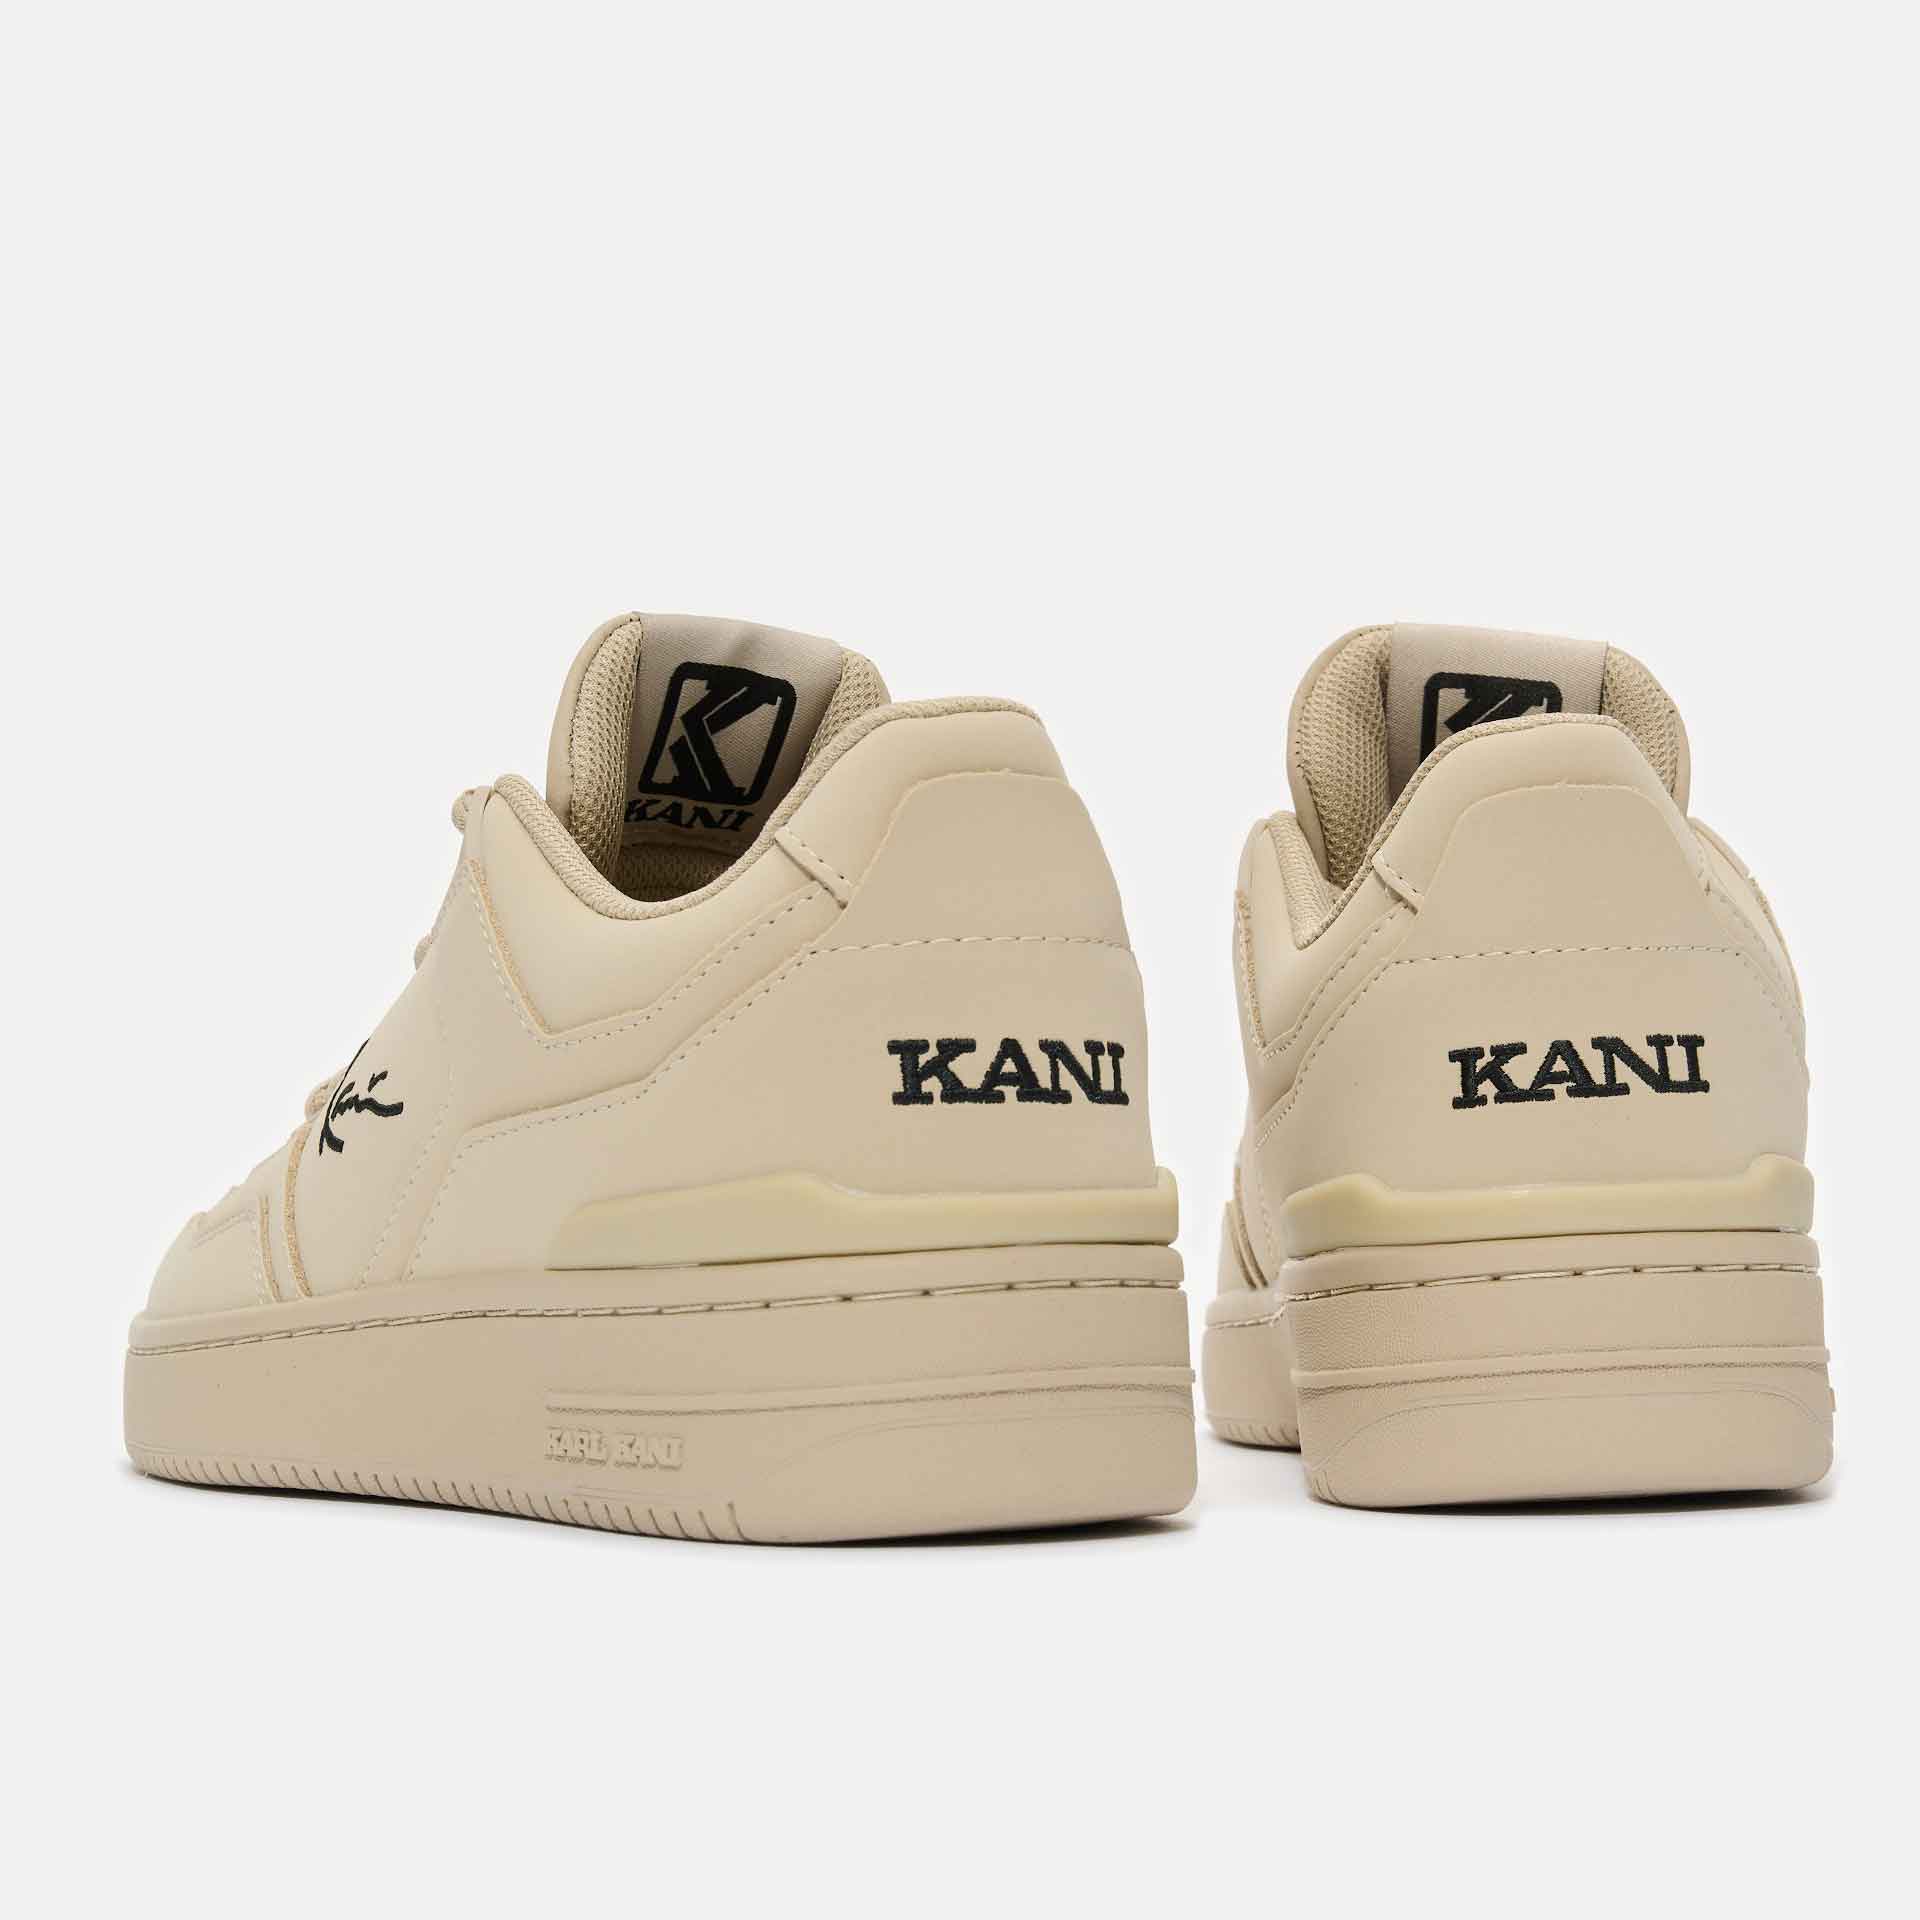 Karl Kani 89 LXRY Sneaker Lt. Beige/Black